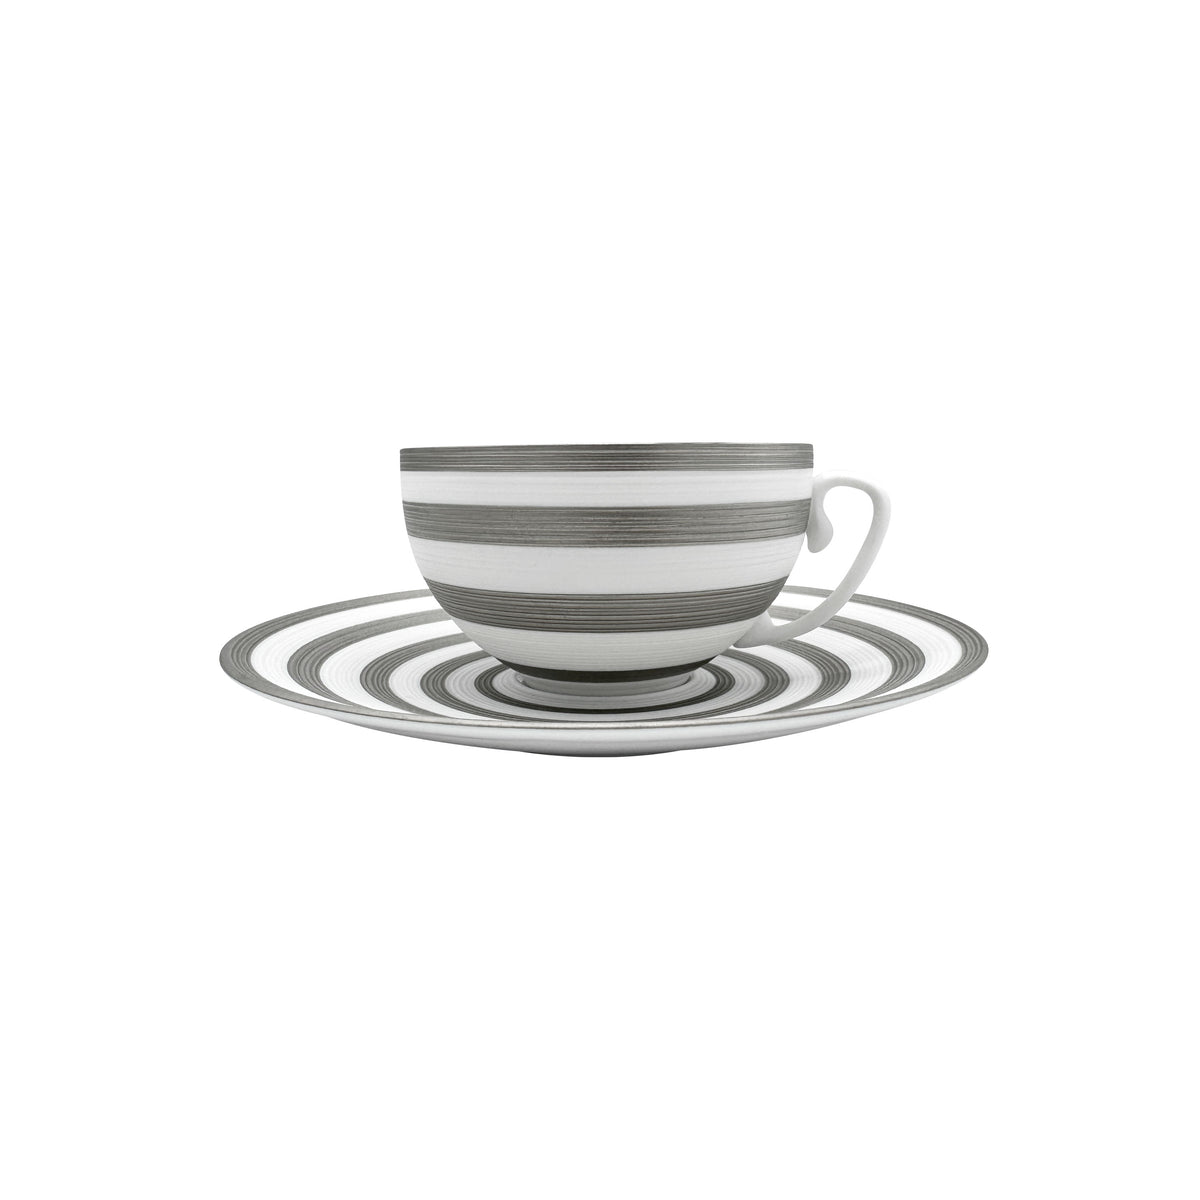 HEMISPHERE Platinum stripes- Tea set (cup & saucer)